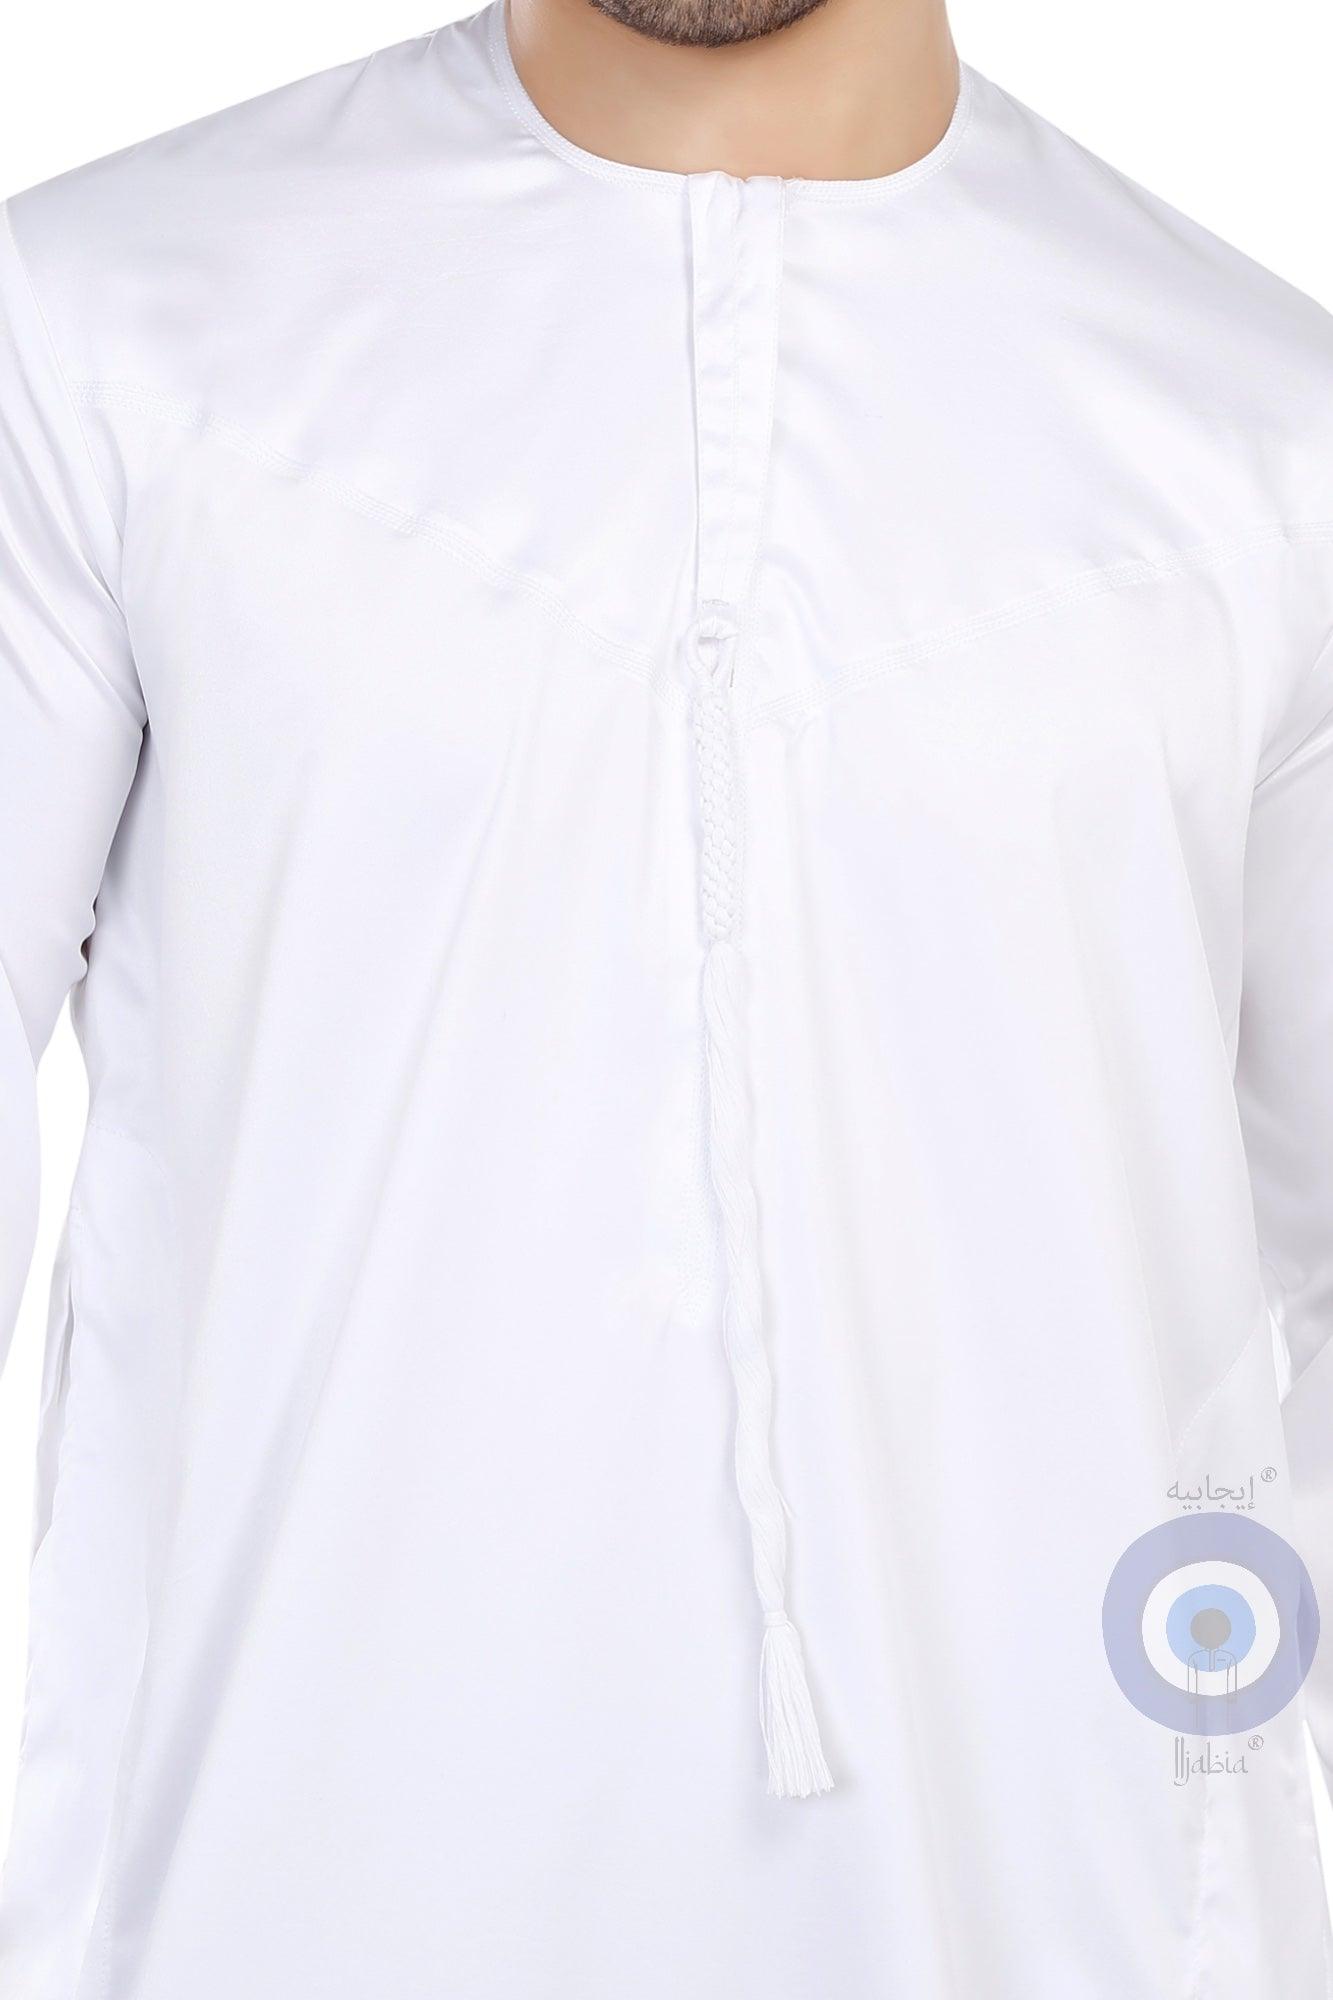 Imported Vietnam Fabric Emirati Mens Omani Thobe - Full Sleeves - White - IIJABIA